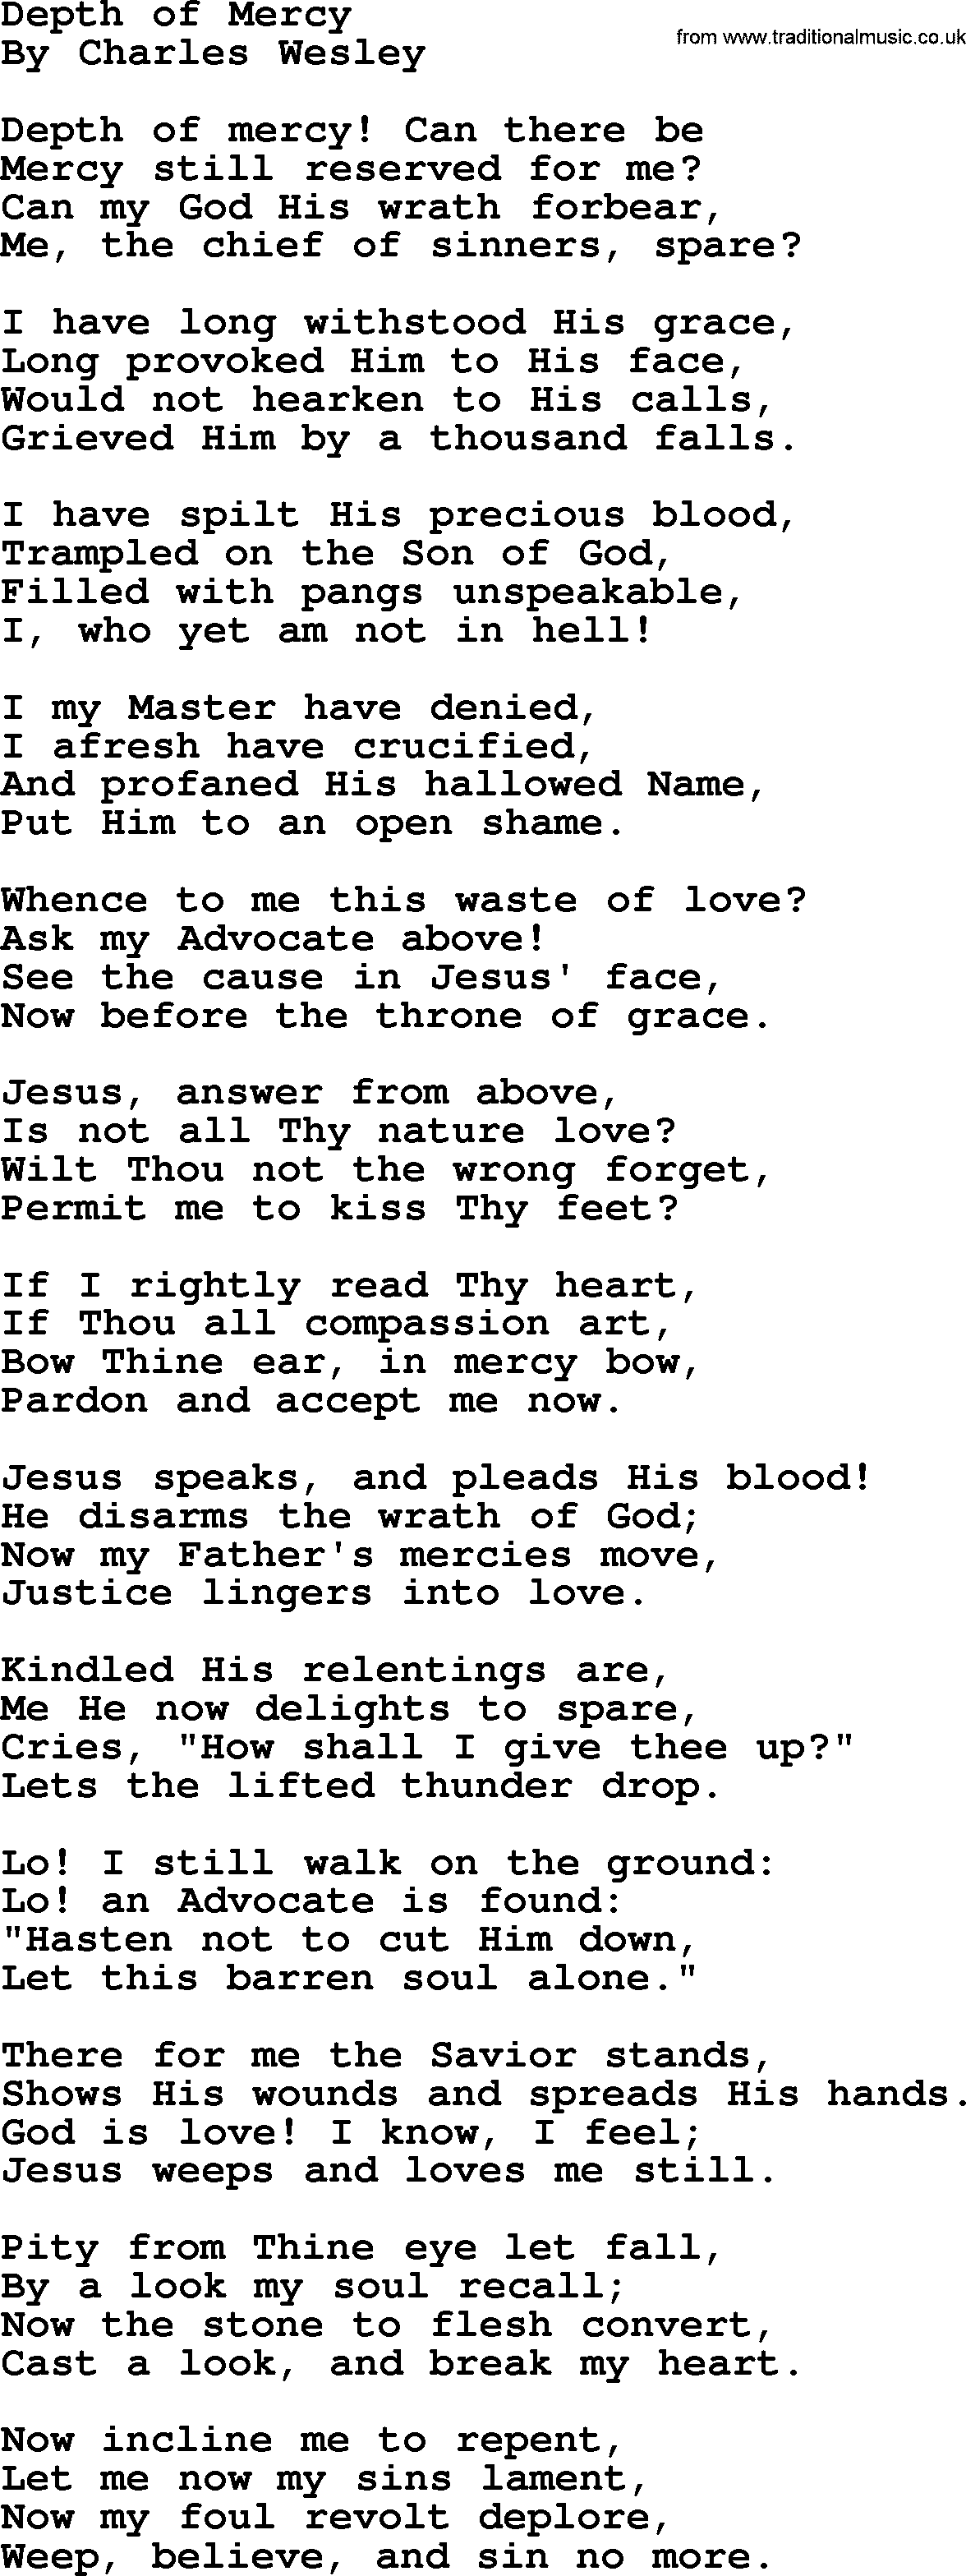 Charles Wesley hymn: Depth of Mercy, lyrics